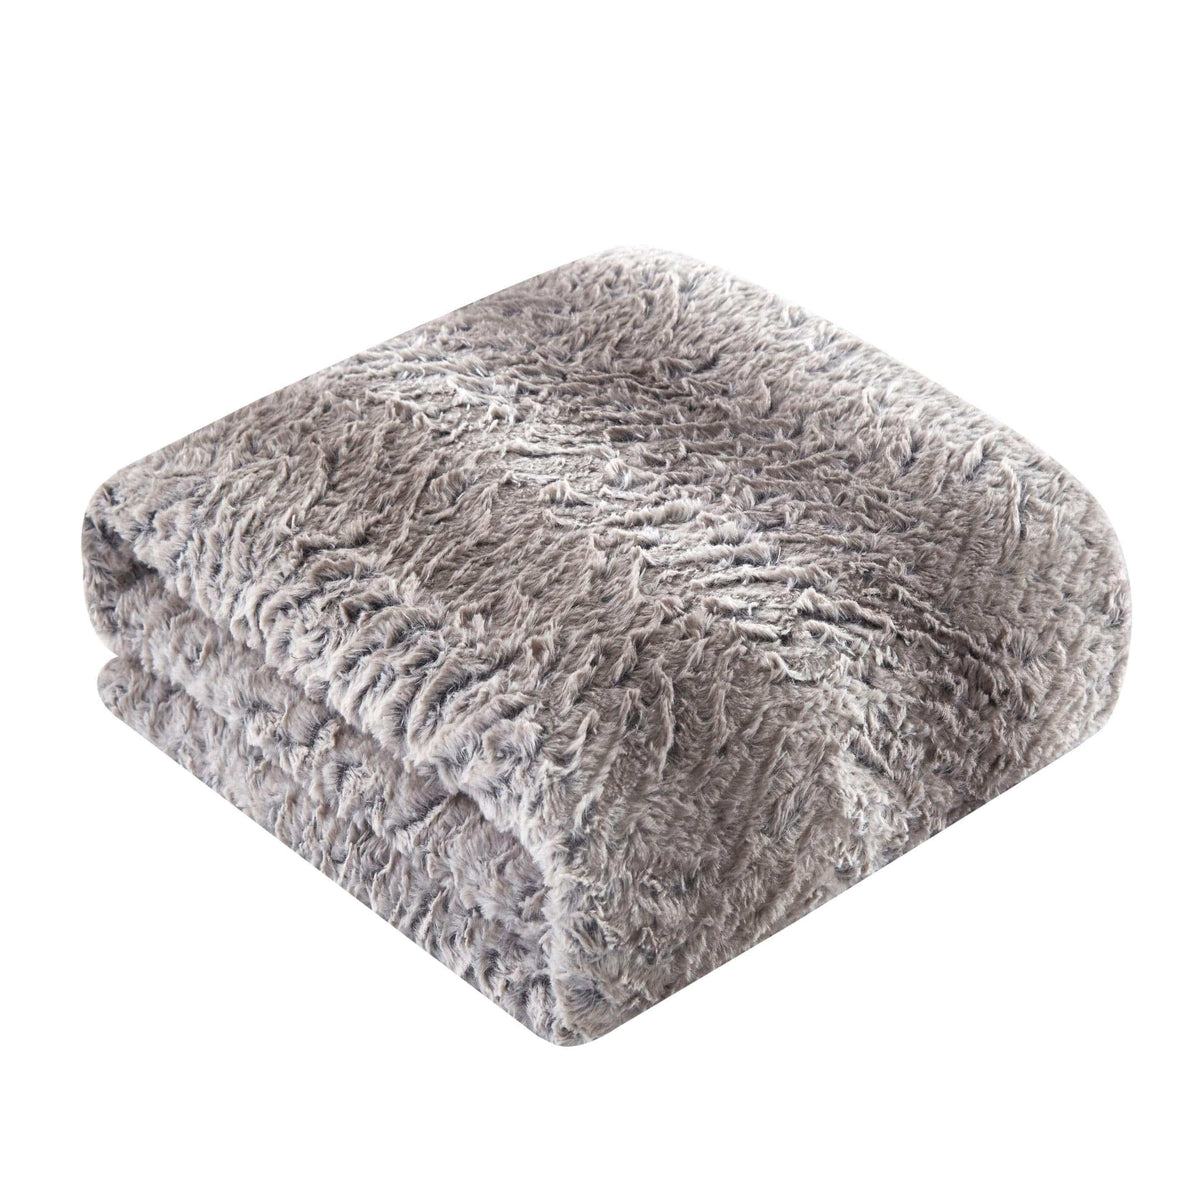 Chic Home Sanda Throw Blanket Cozy Super Soft Ultra Plush Decorative Shaggy Faux Fur Sherpa Lined 